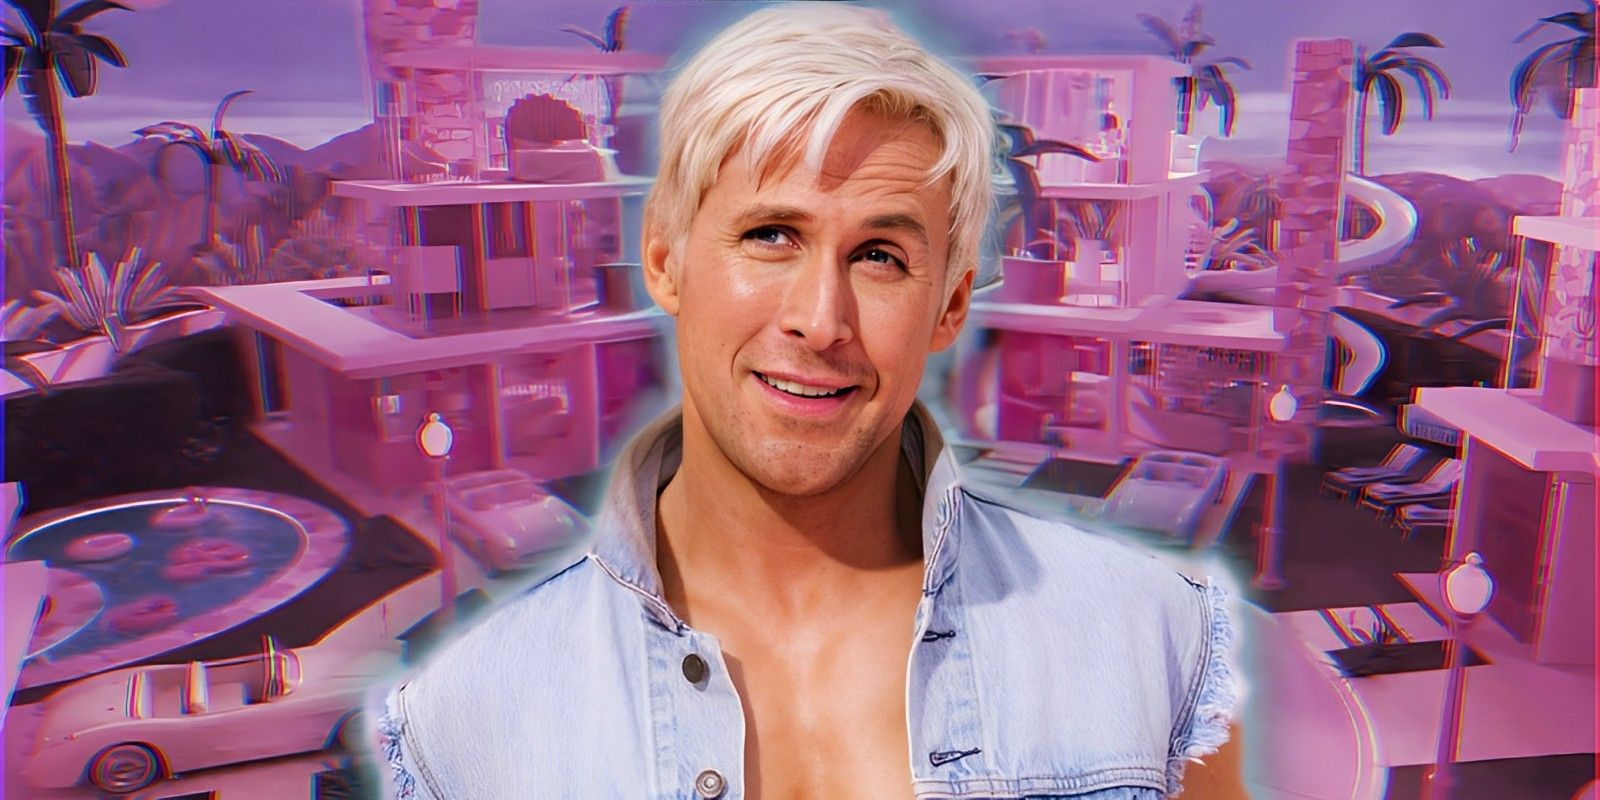 Ryan Gosling’s Ken smirking in front of Barbie’s pink paradise Dreamhouses of Barbieland.